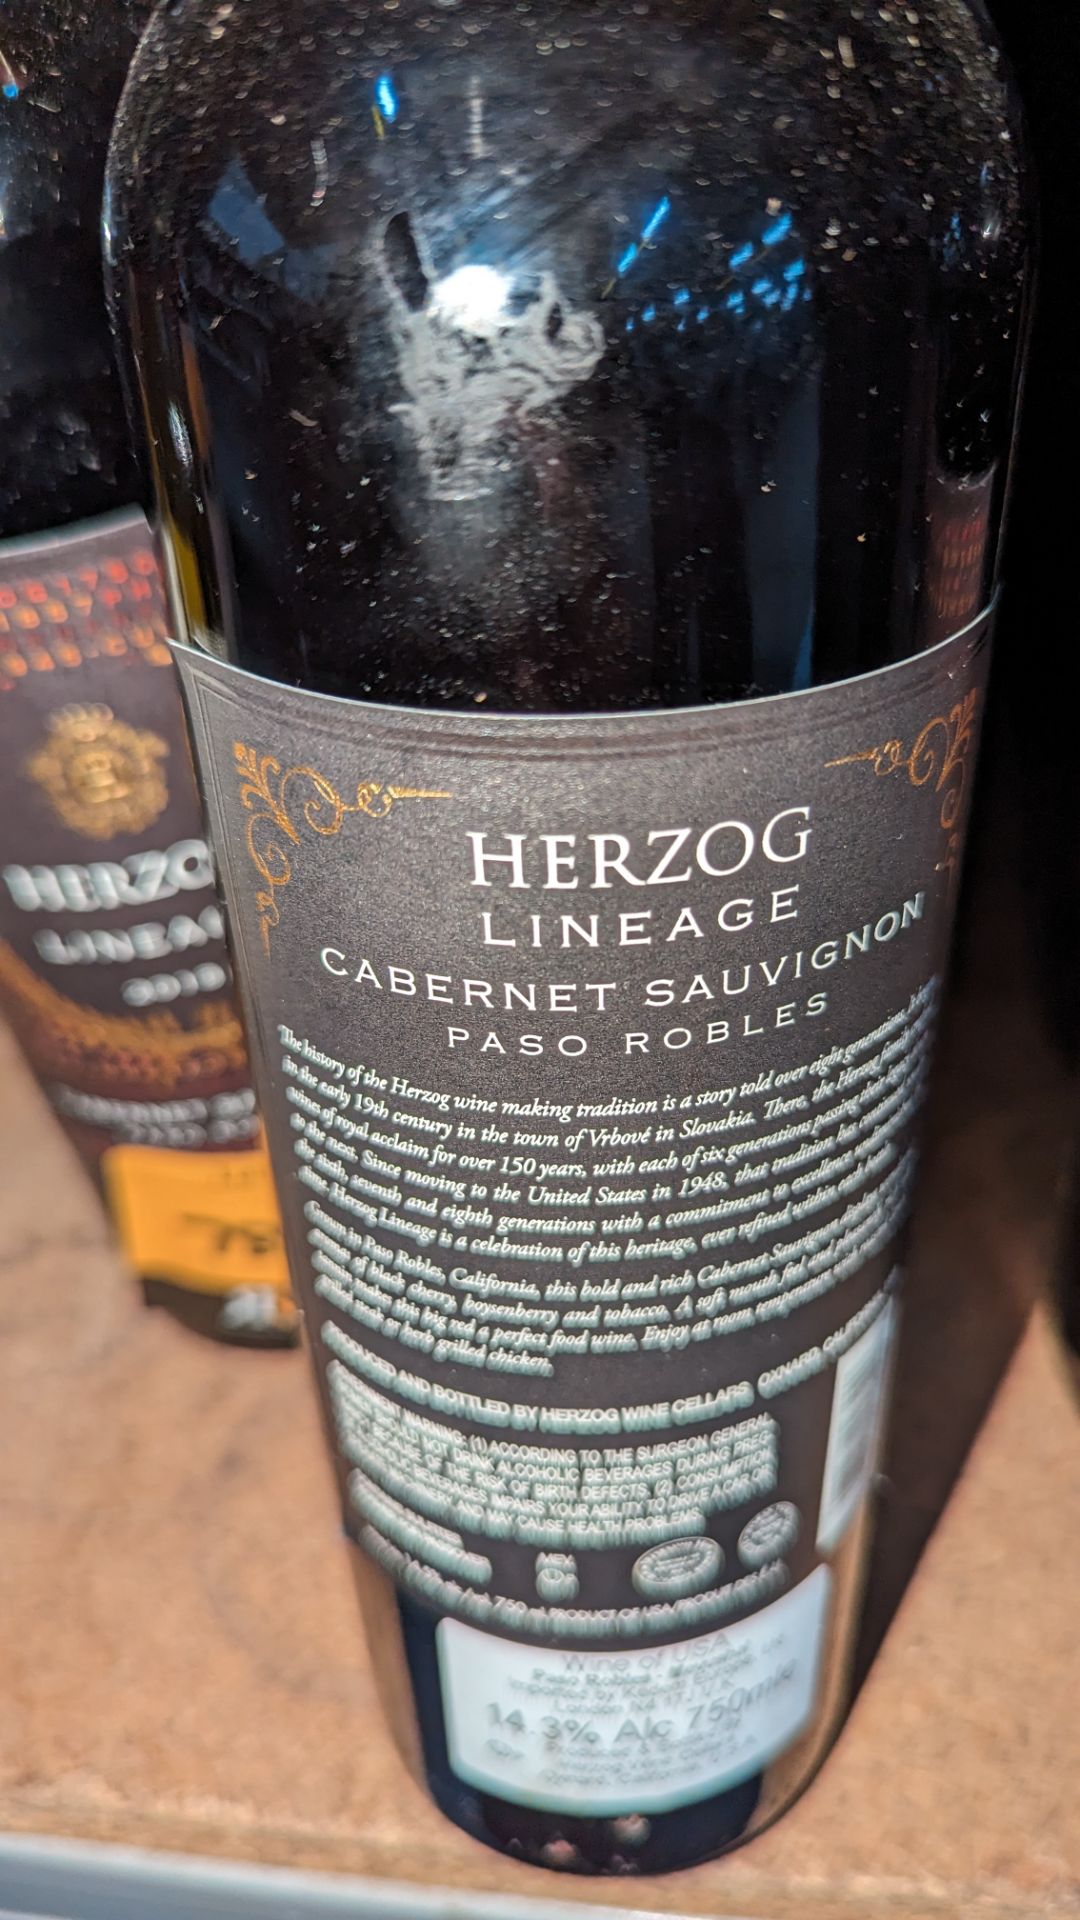 22 bottles of 2018 Herzog Lineage Cabernet Sauvignon Californian red wine & 1 bottle of 2017 Herzog - Image 6 of 6